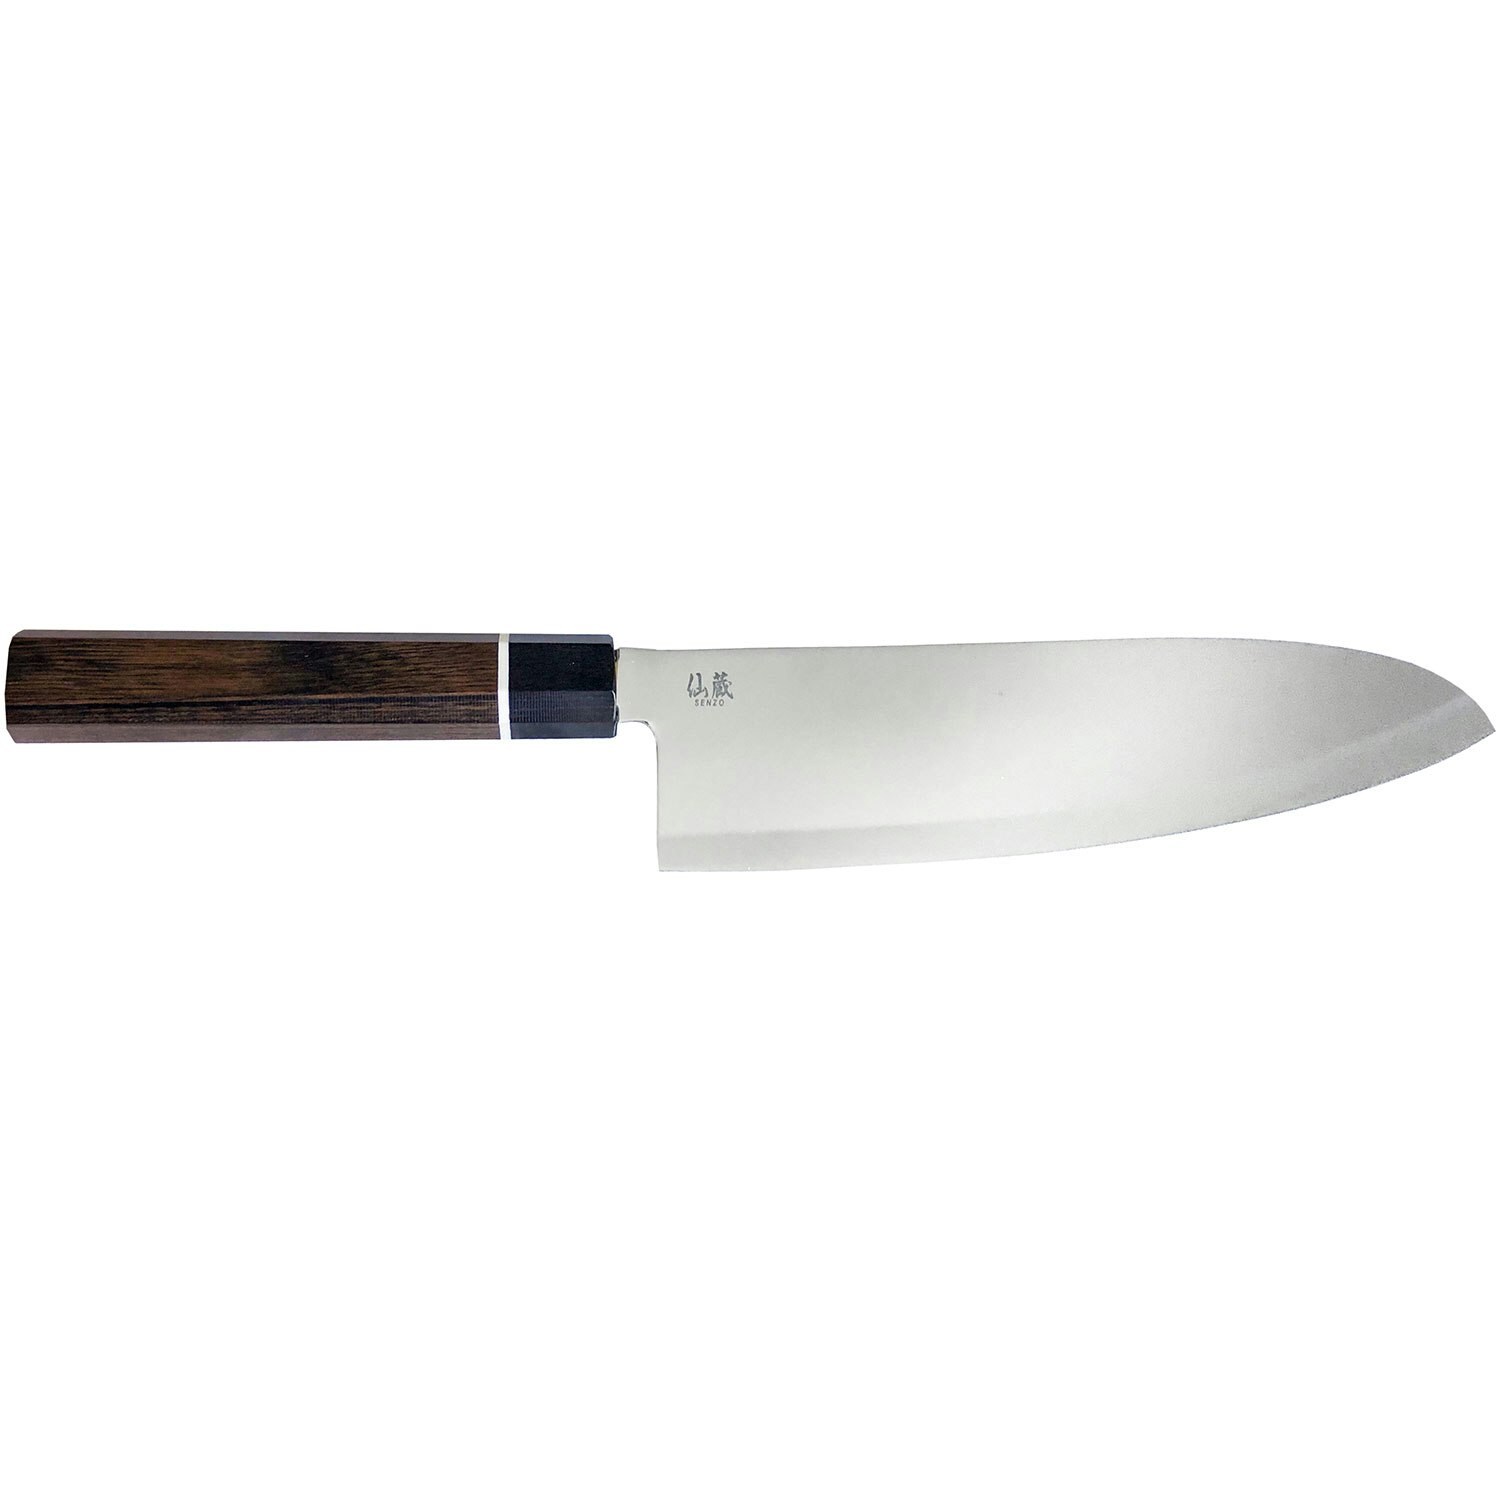 https://royaldesign.com/image/2/senzo-giniro-gyuto-chef-knife-17-cm-0